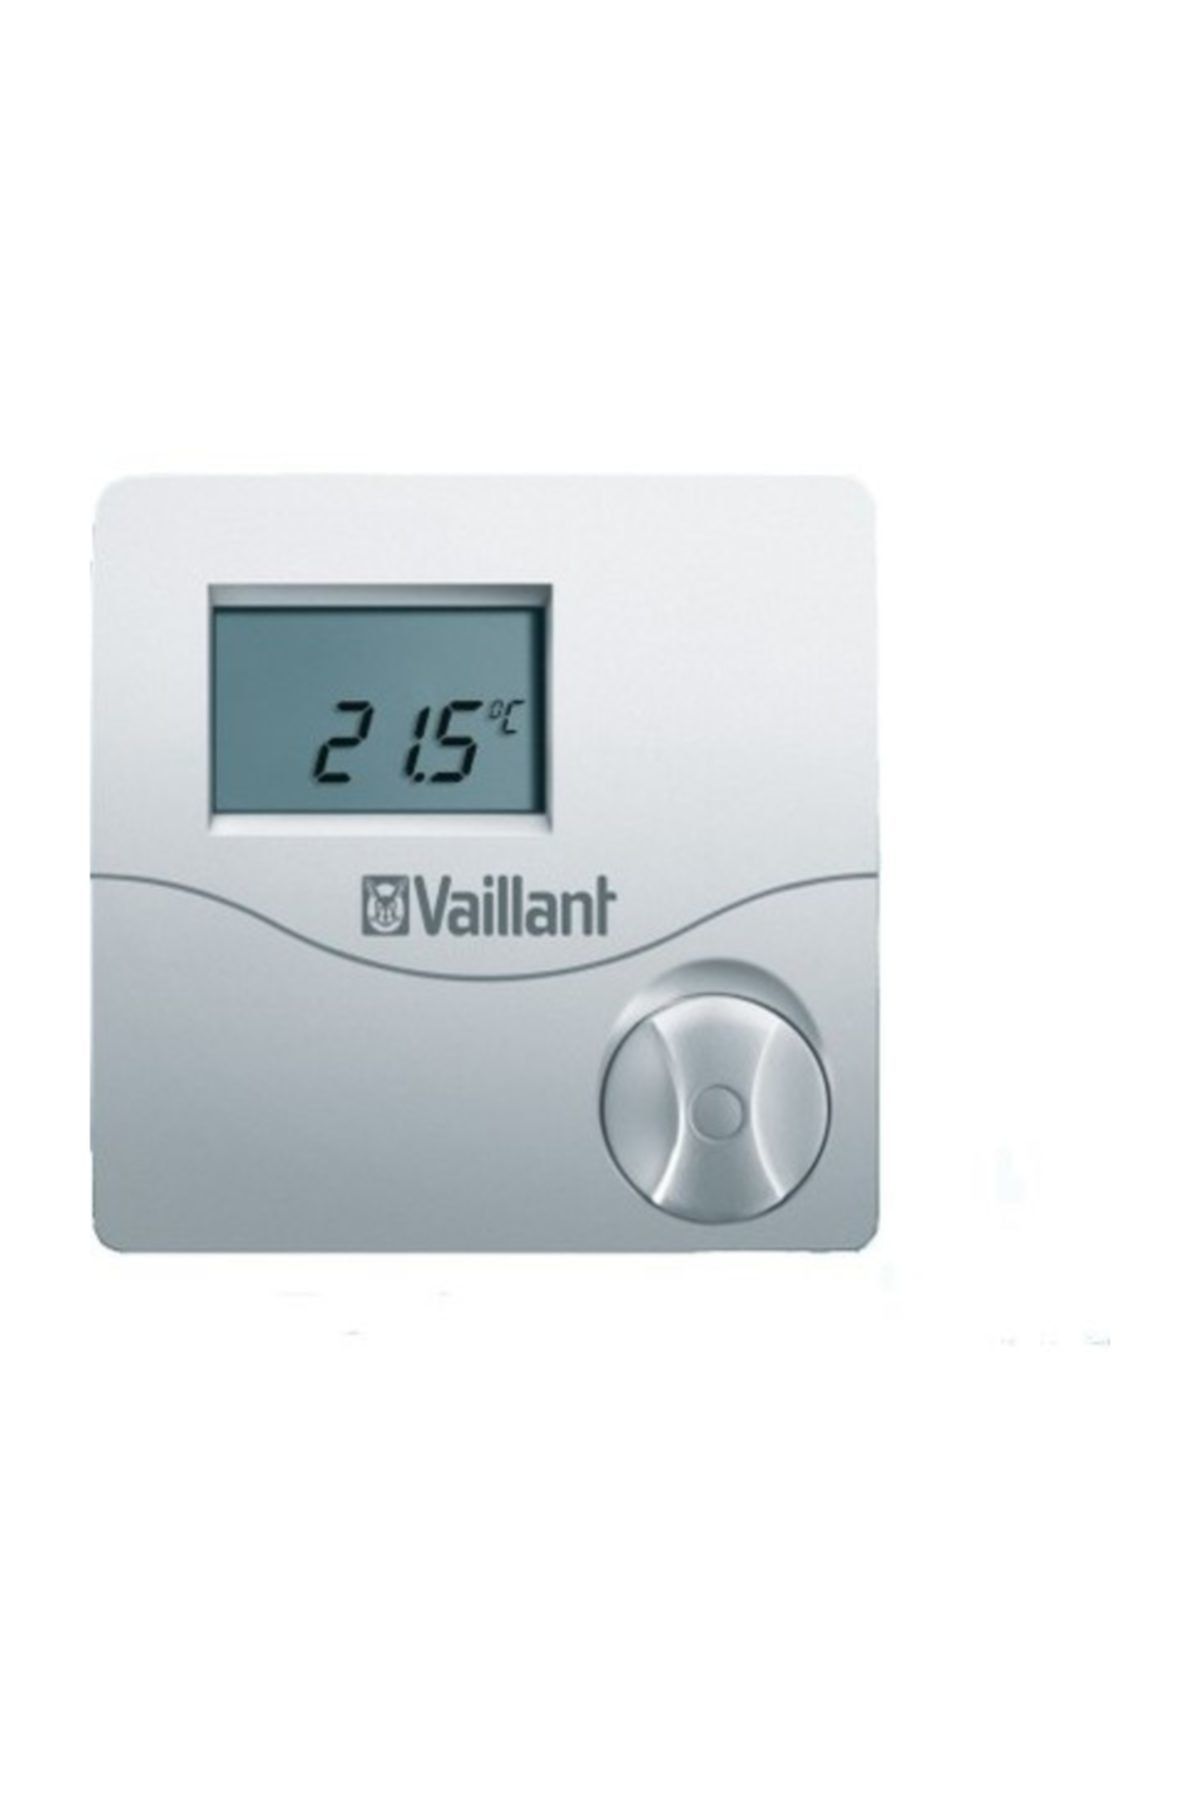 Vaillant Vrt 50 Modülasyonlu Oda Termostatı